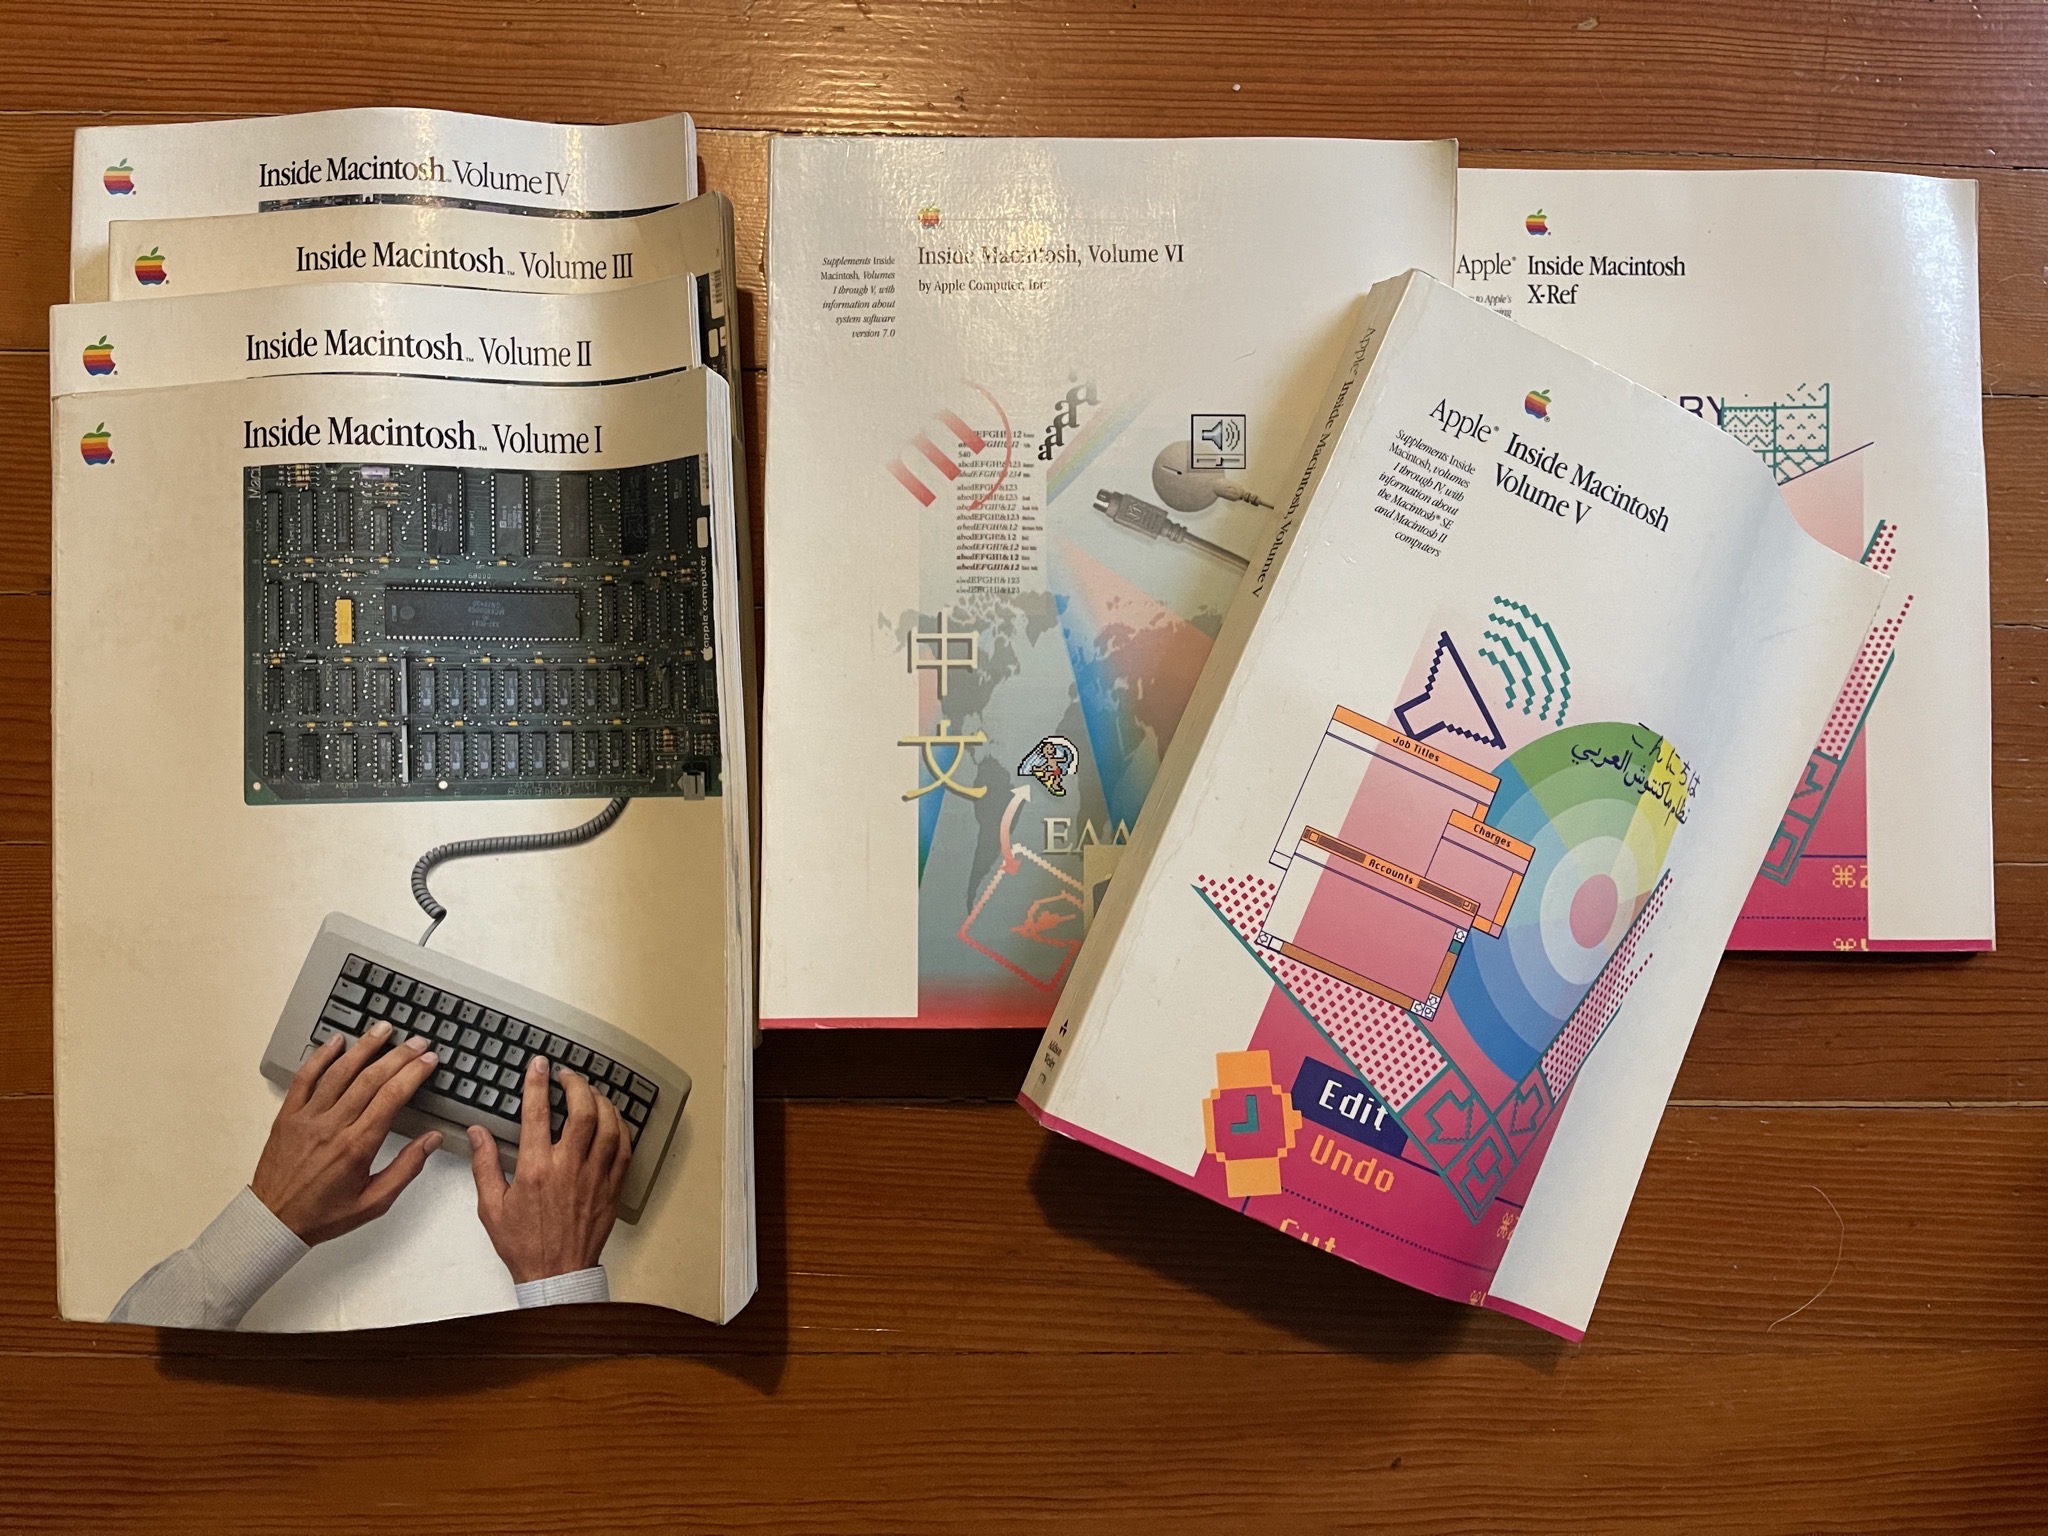 Inside Macintosh reference books